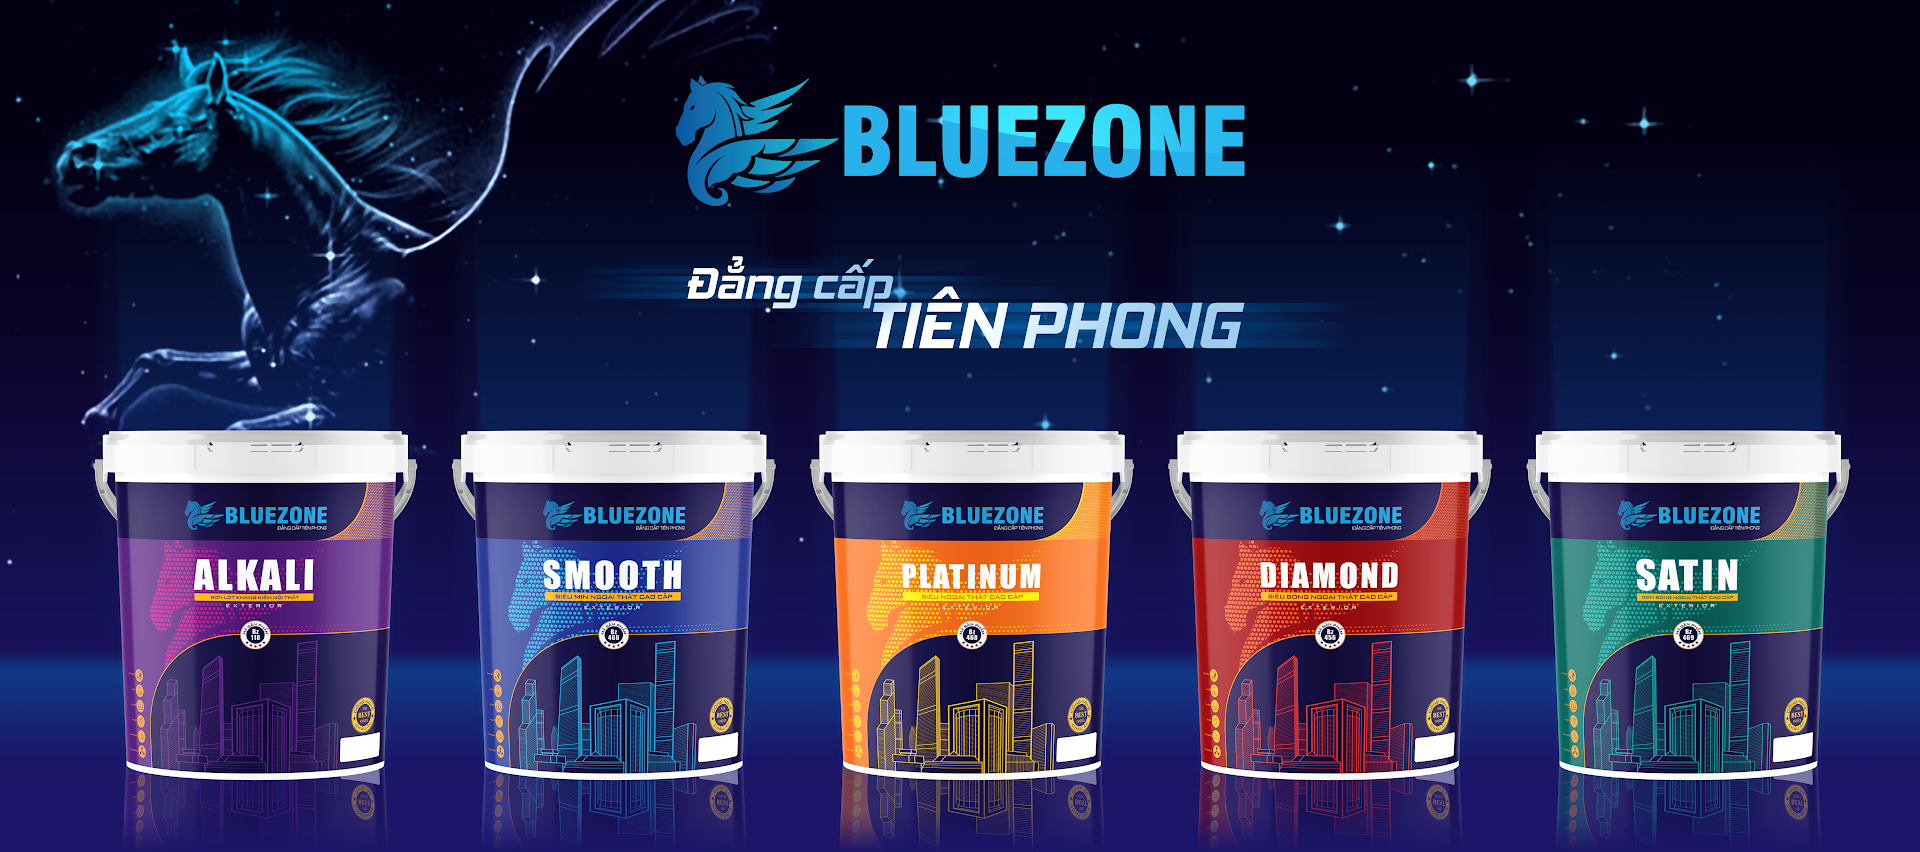 sơn ngói bluezone chất lượng cao